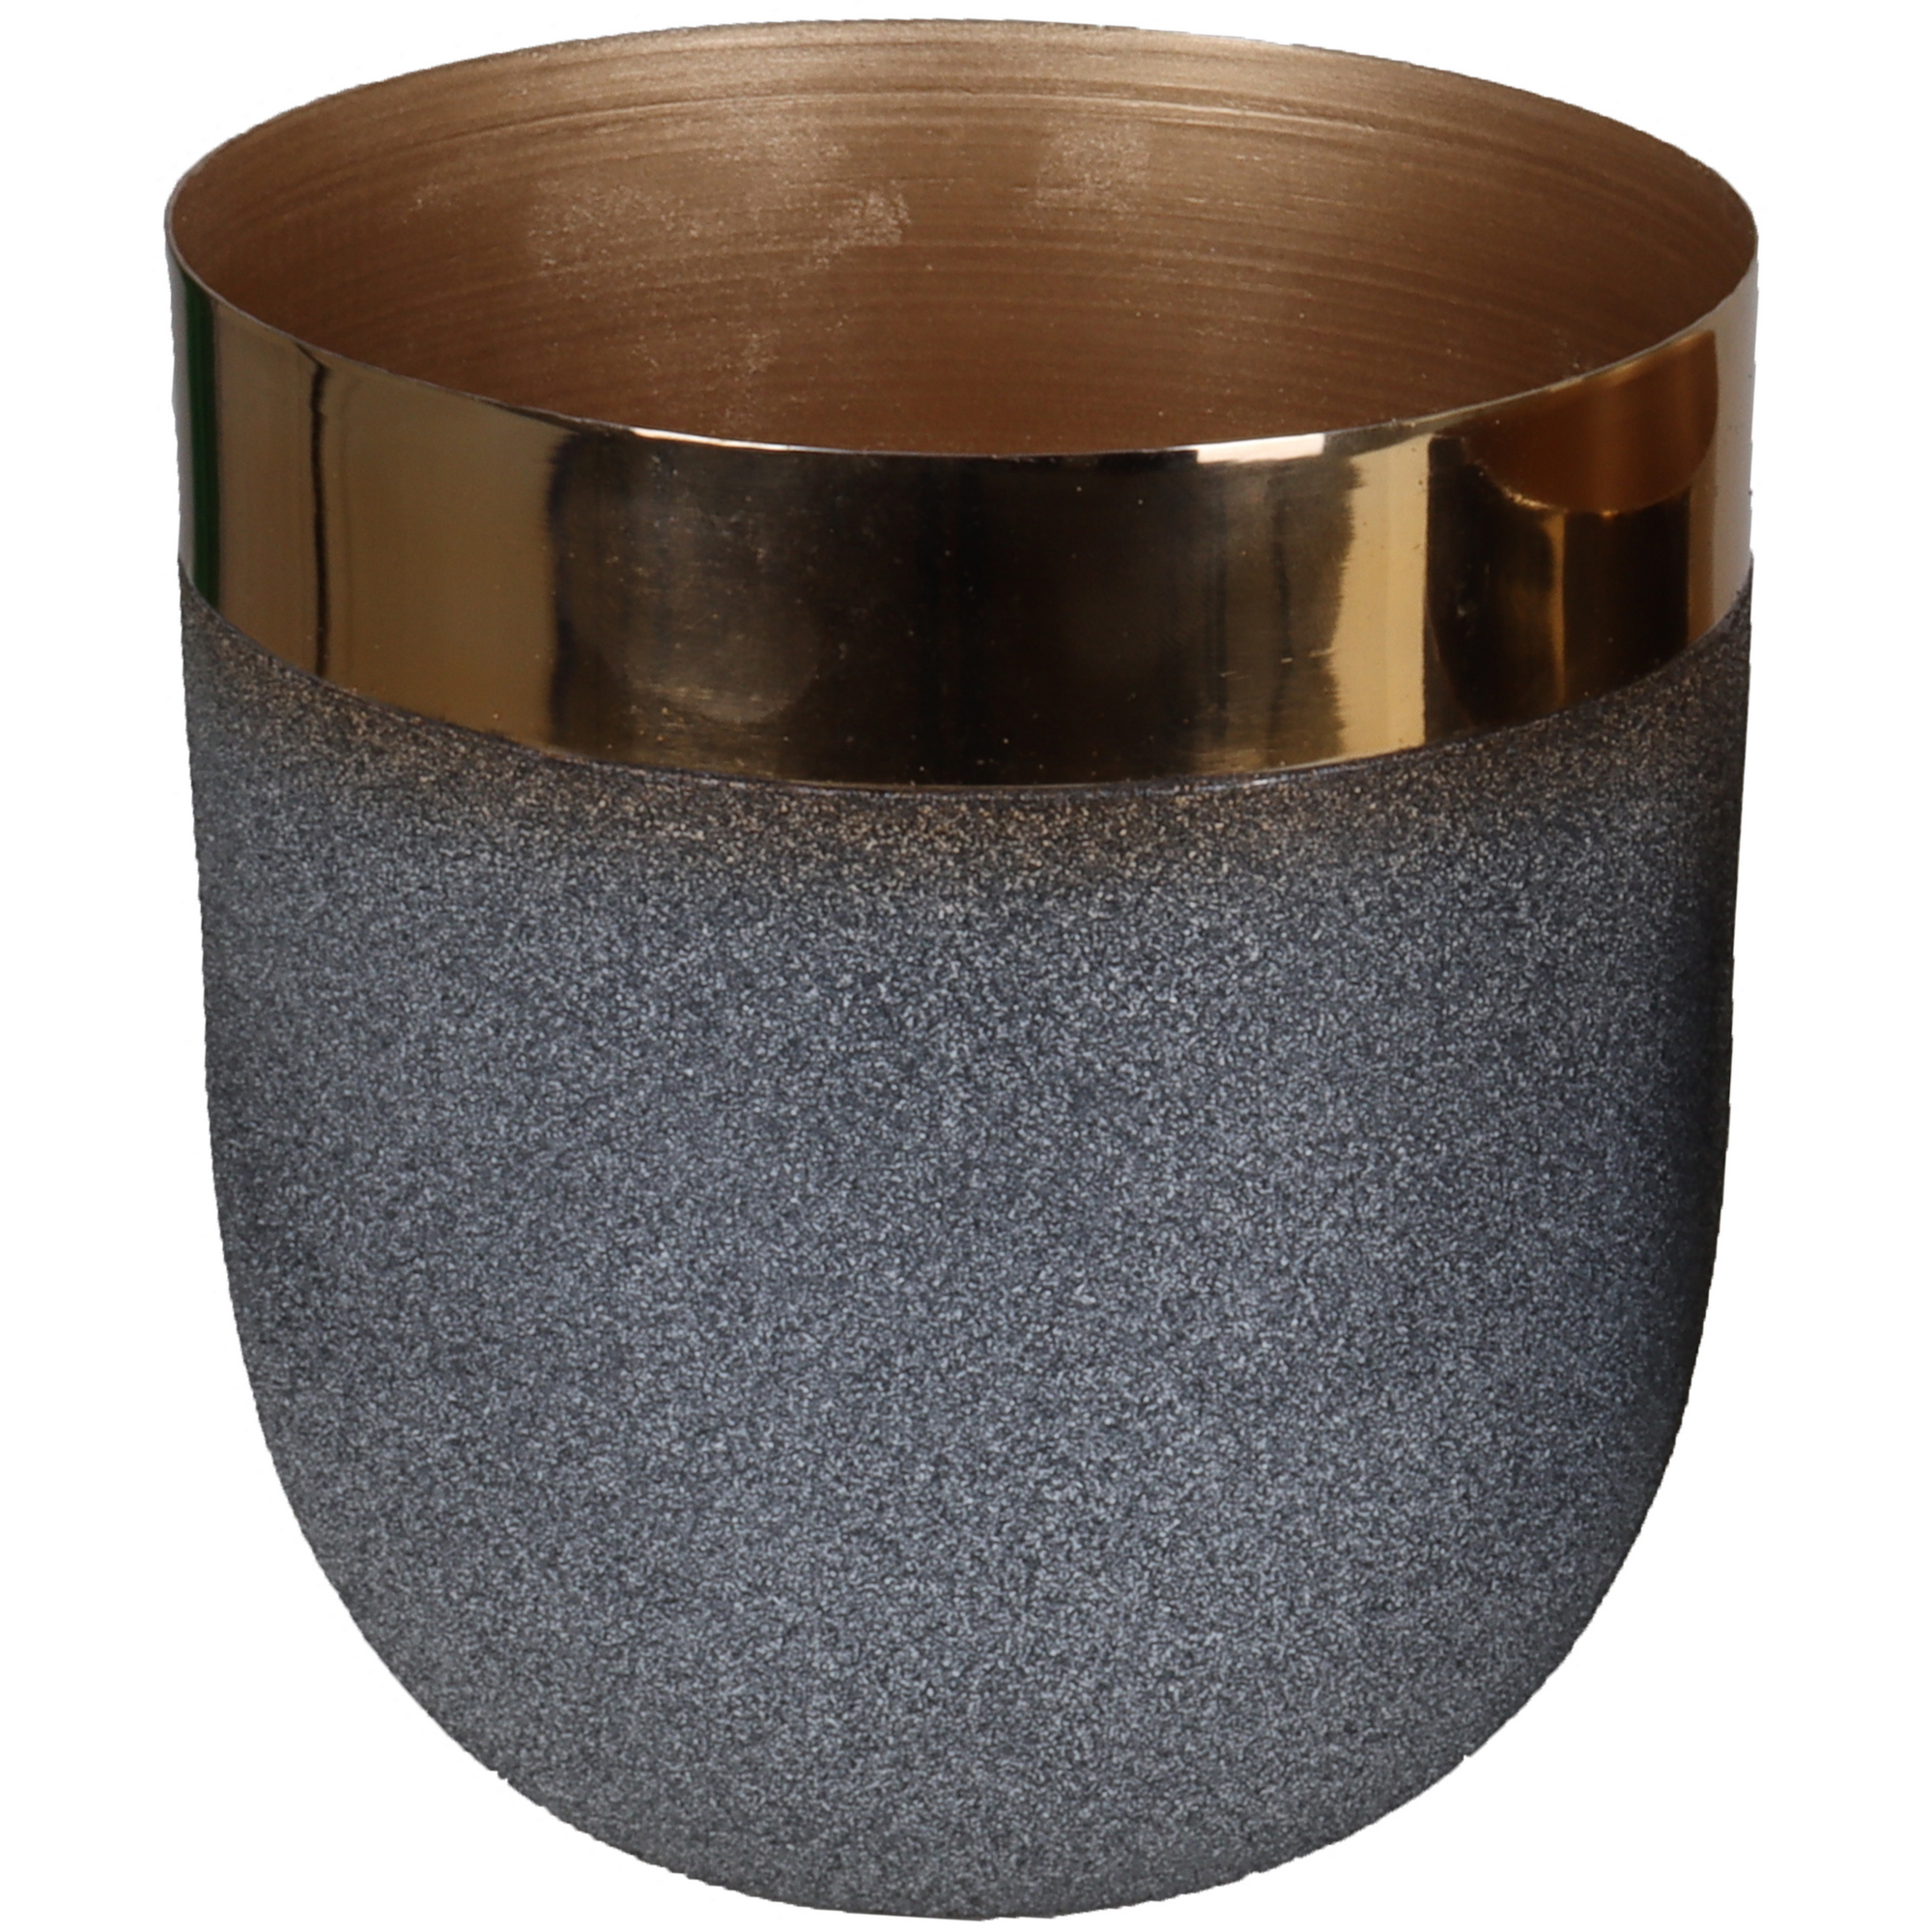 Metallübertopf lackiert grau mit Goldrand 10 x 10 cm + product picture